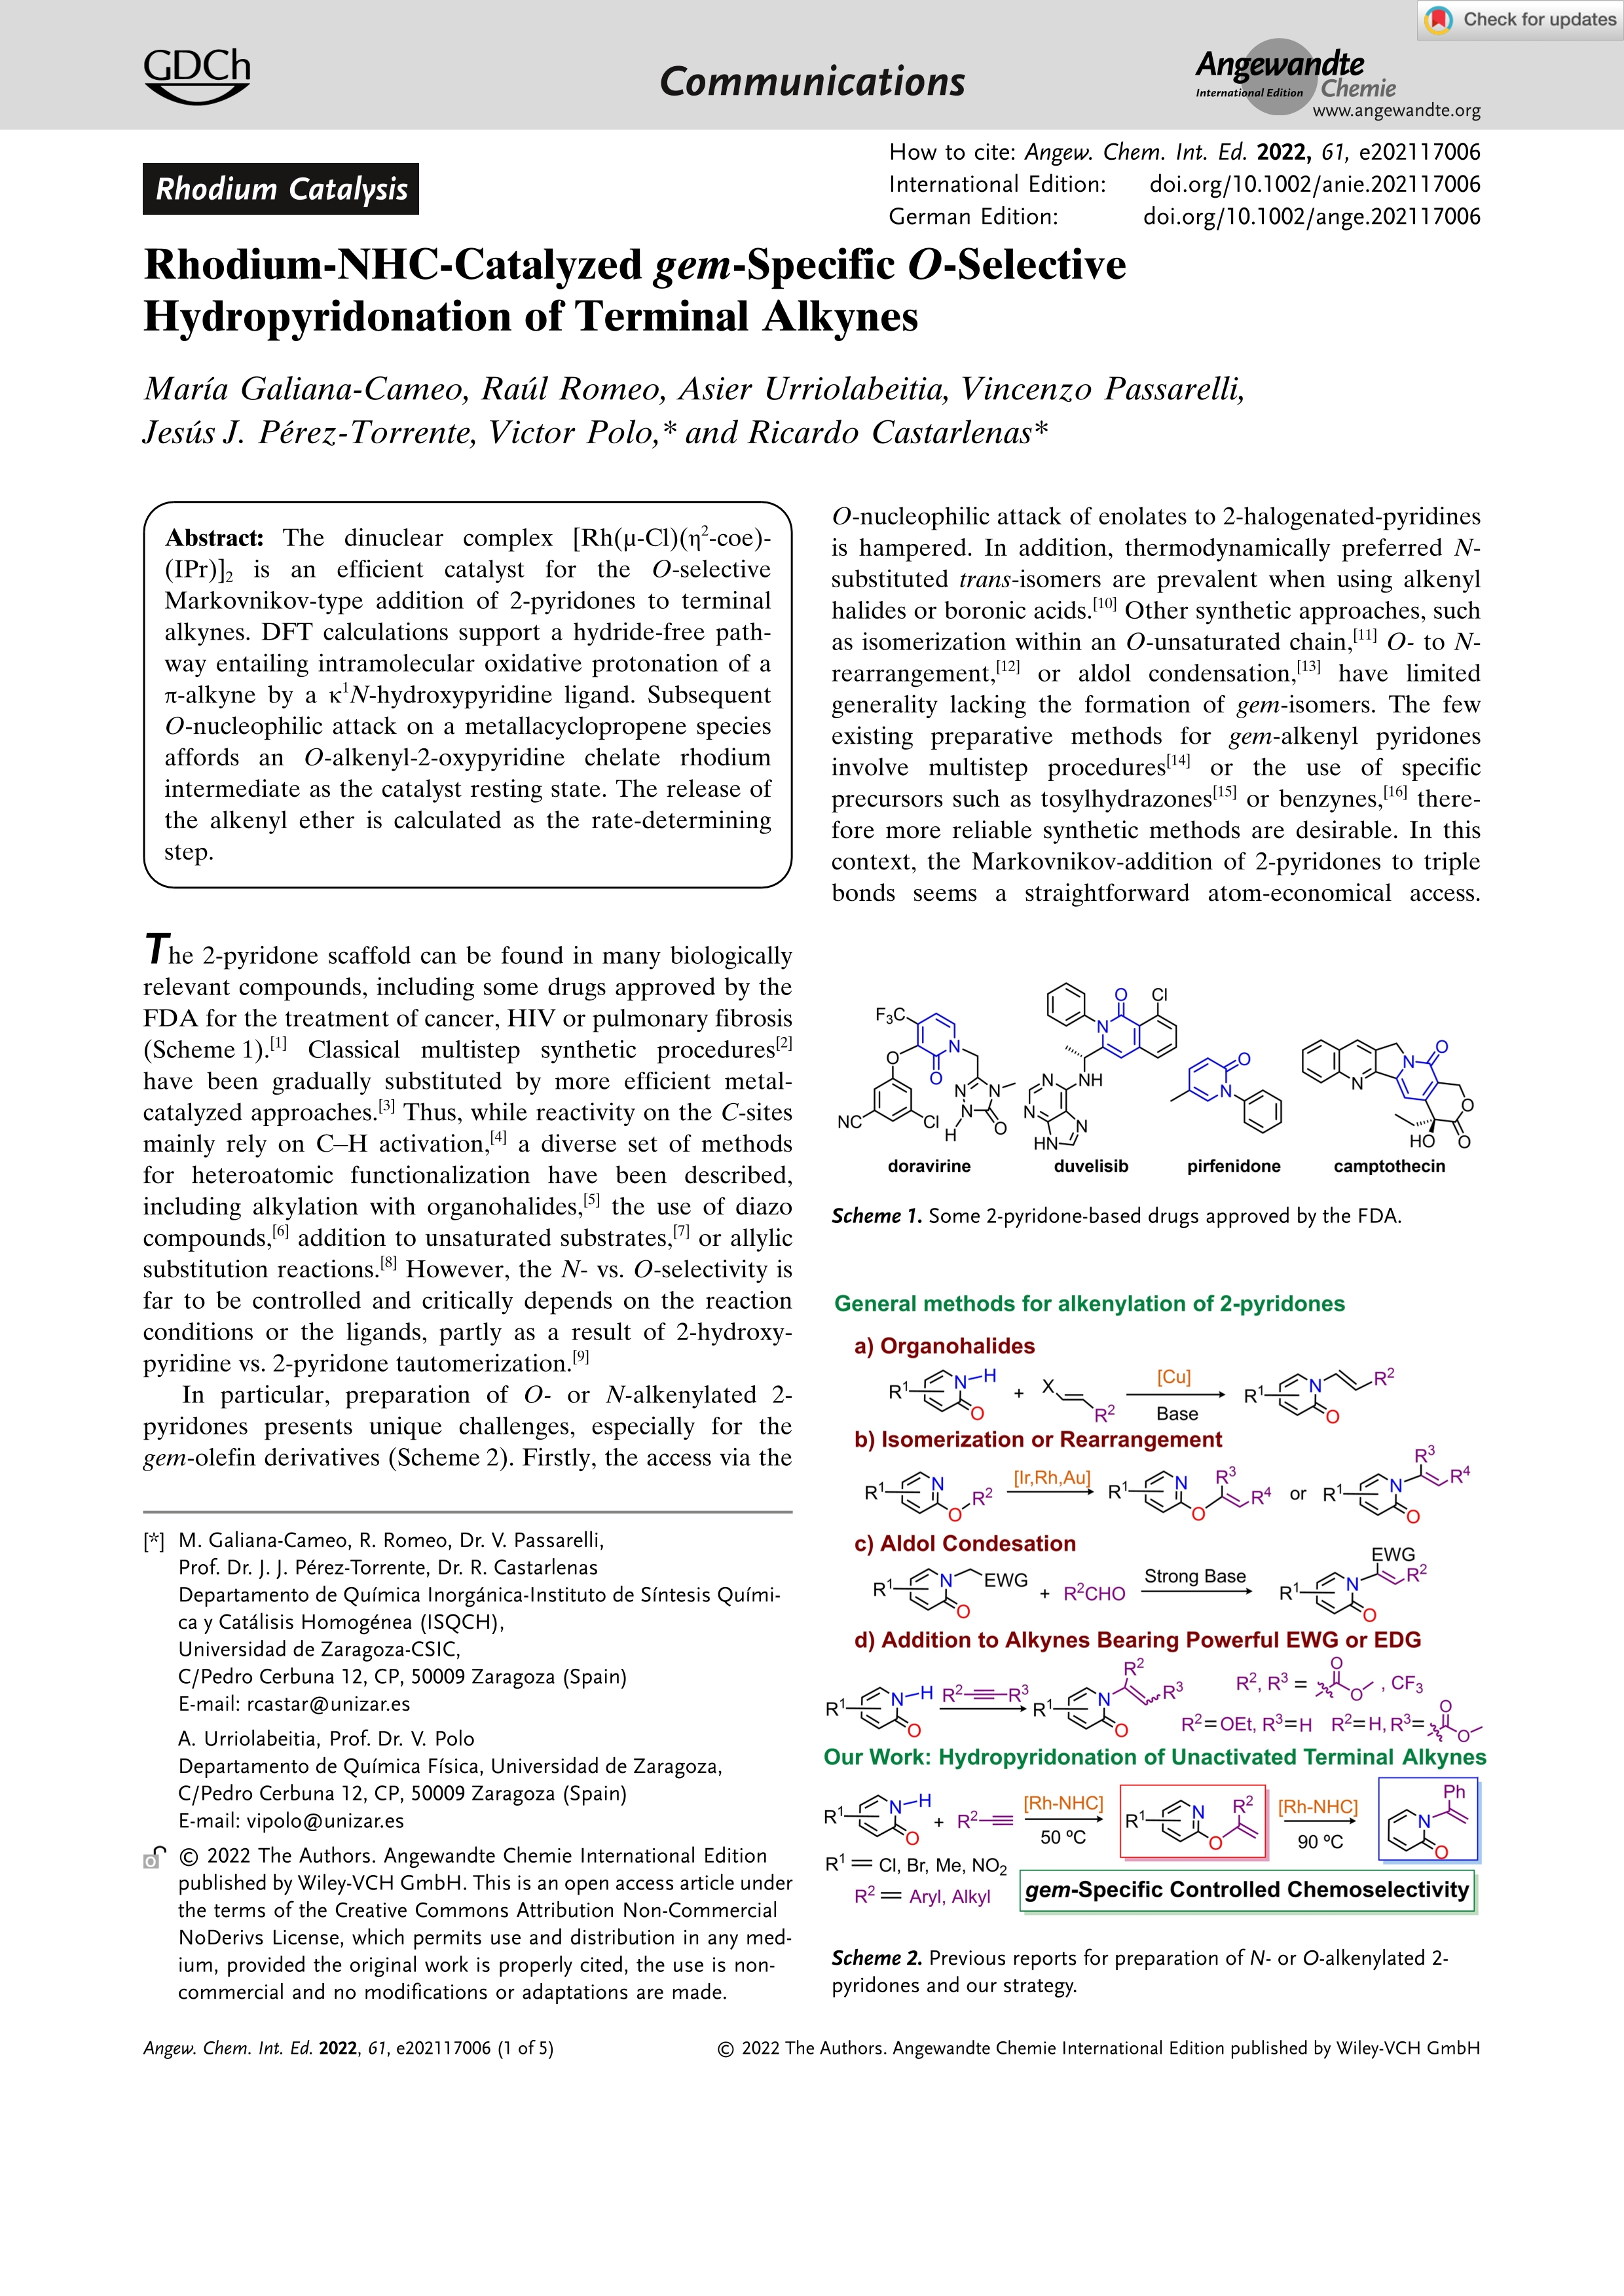 Rhodium-NHC-Catalyzed gem-Specific O-Selective Hydropyridonation of Terminal Alkynes